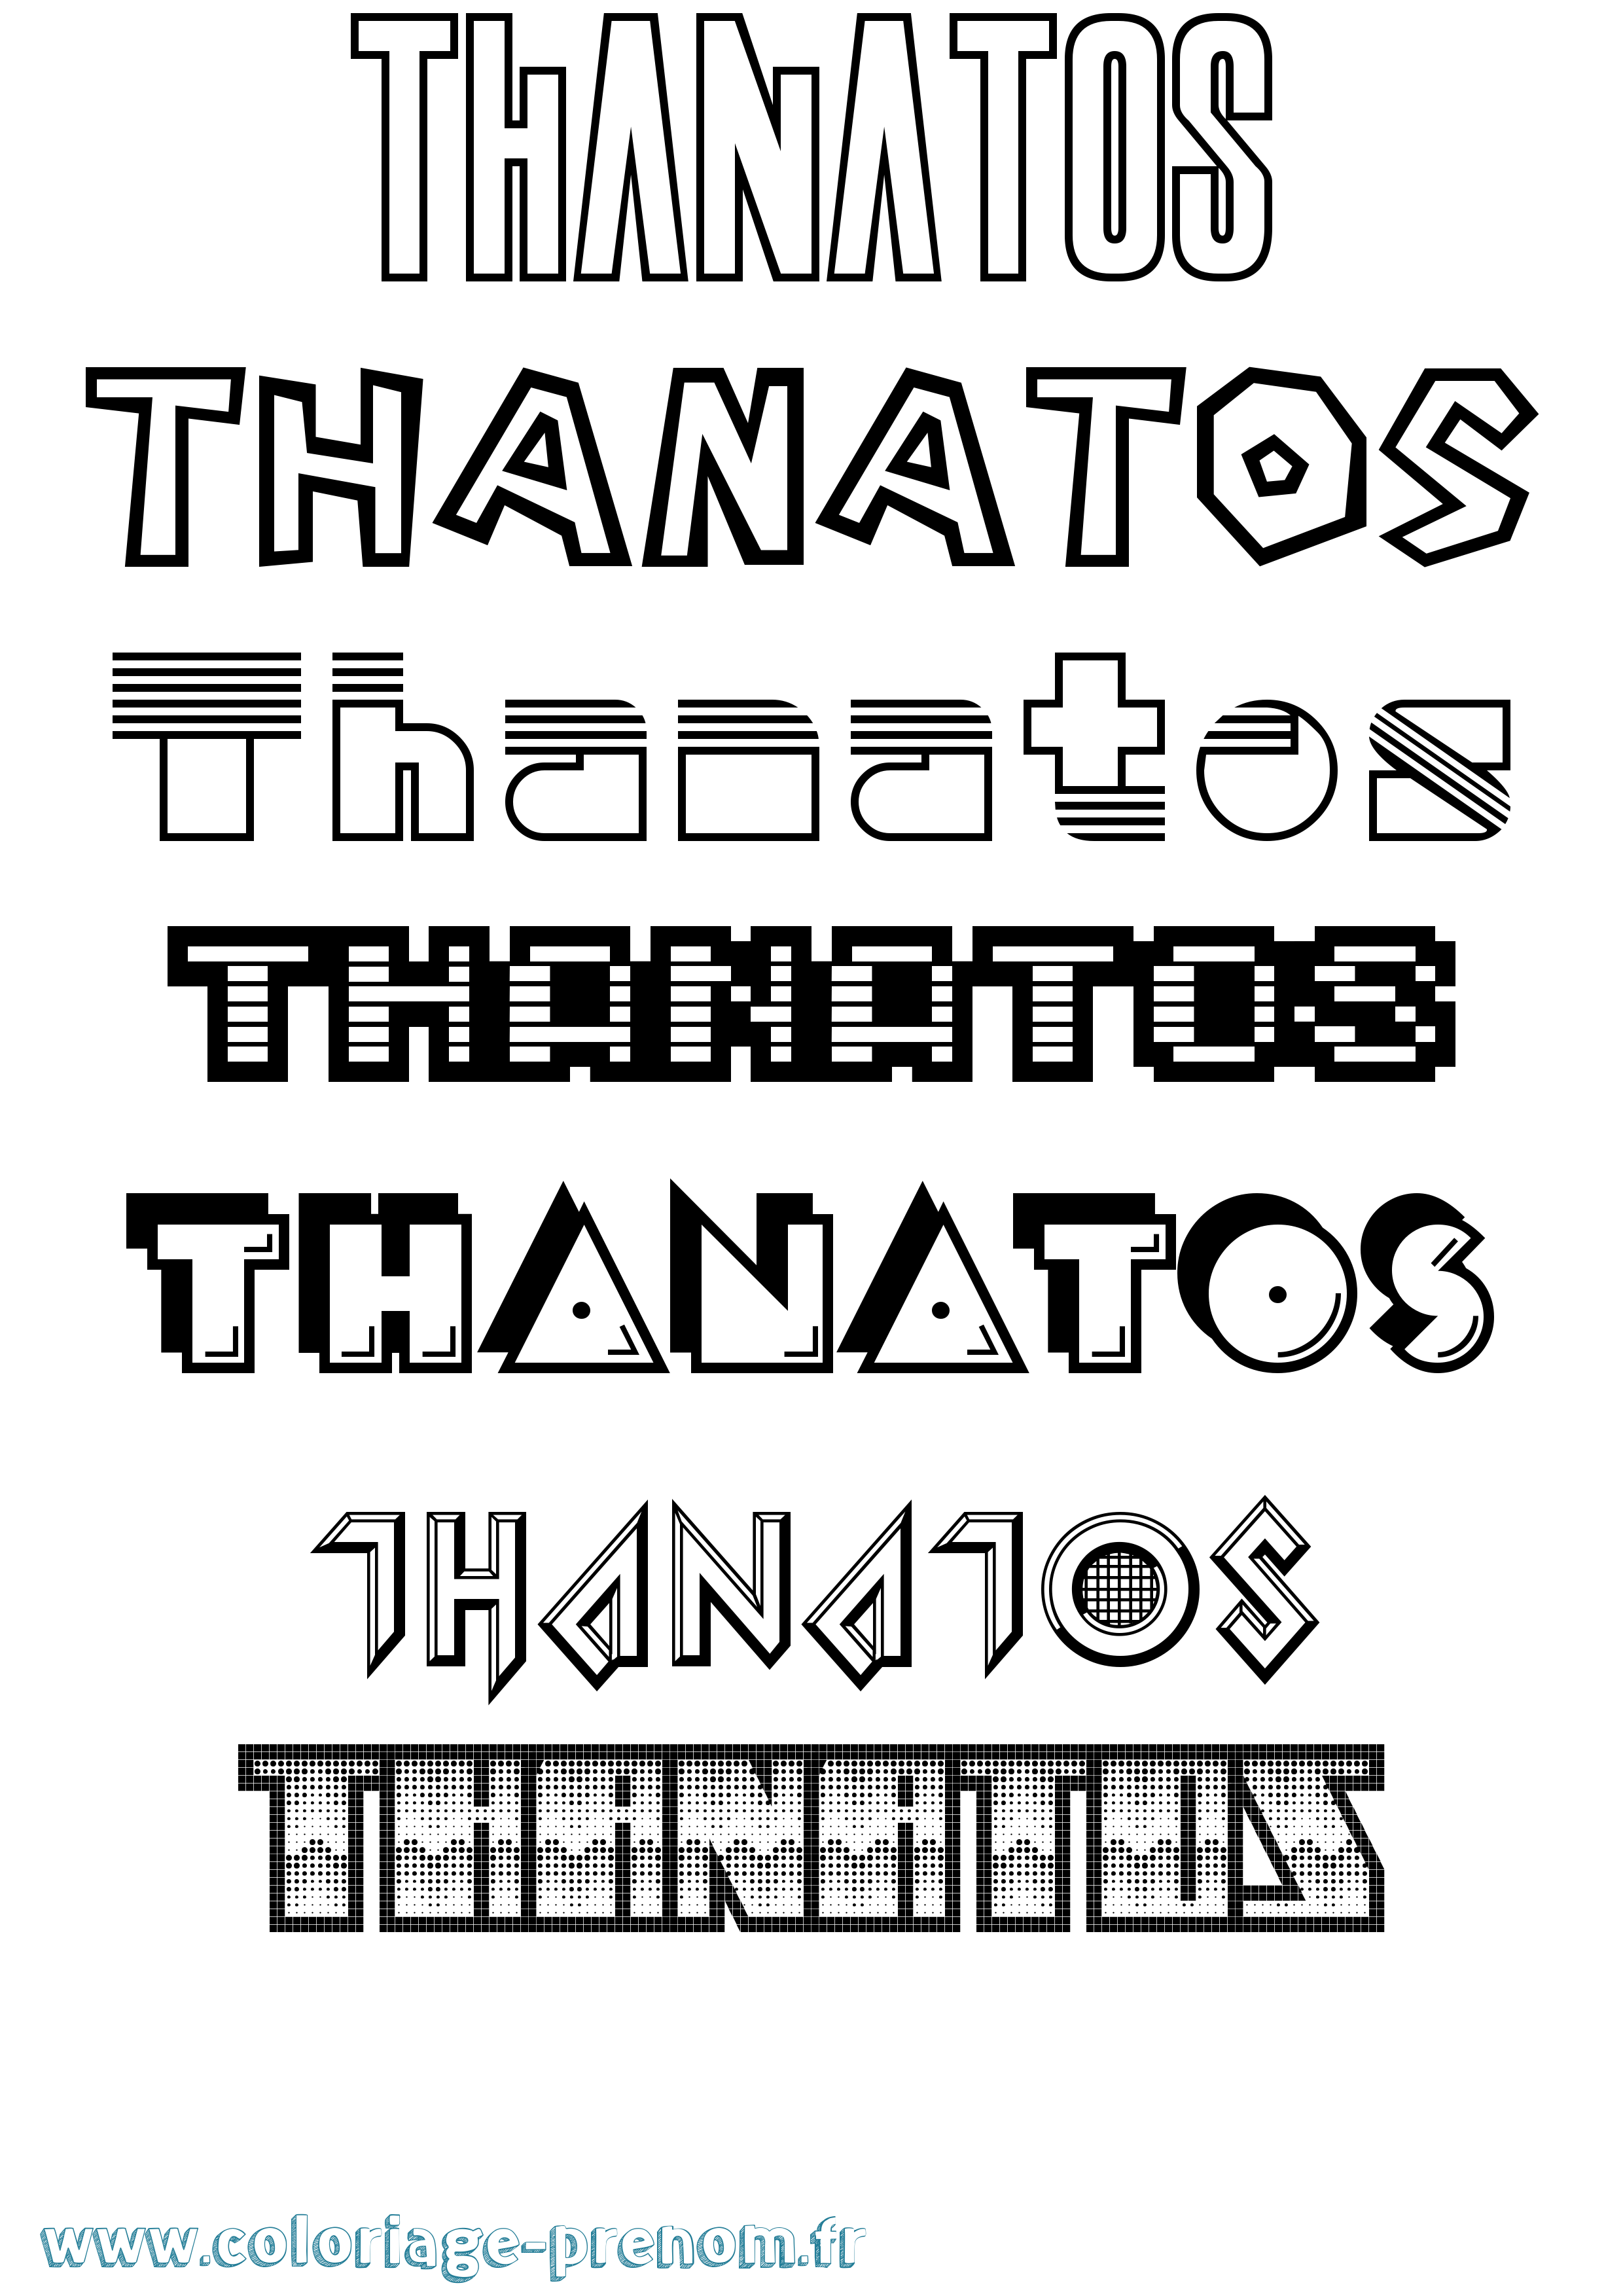 Coloriage prénom Thanatos Jeux Vidéos